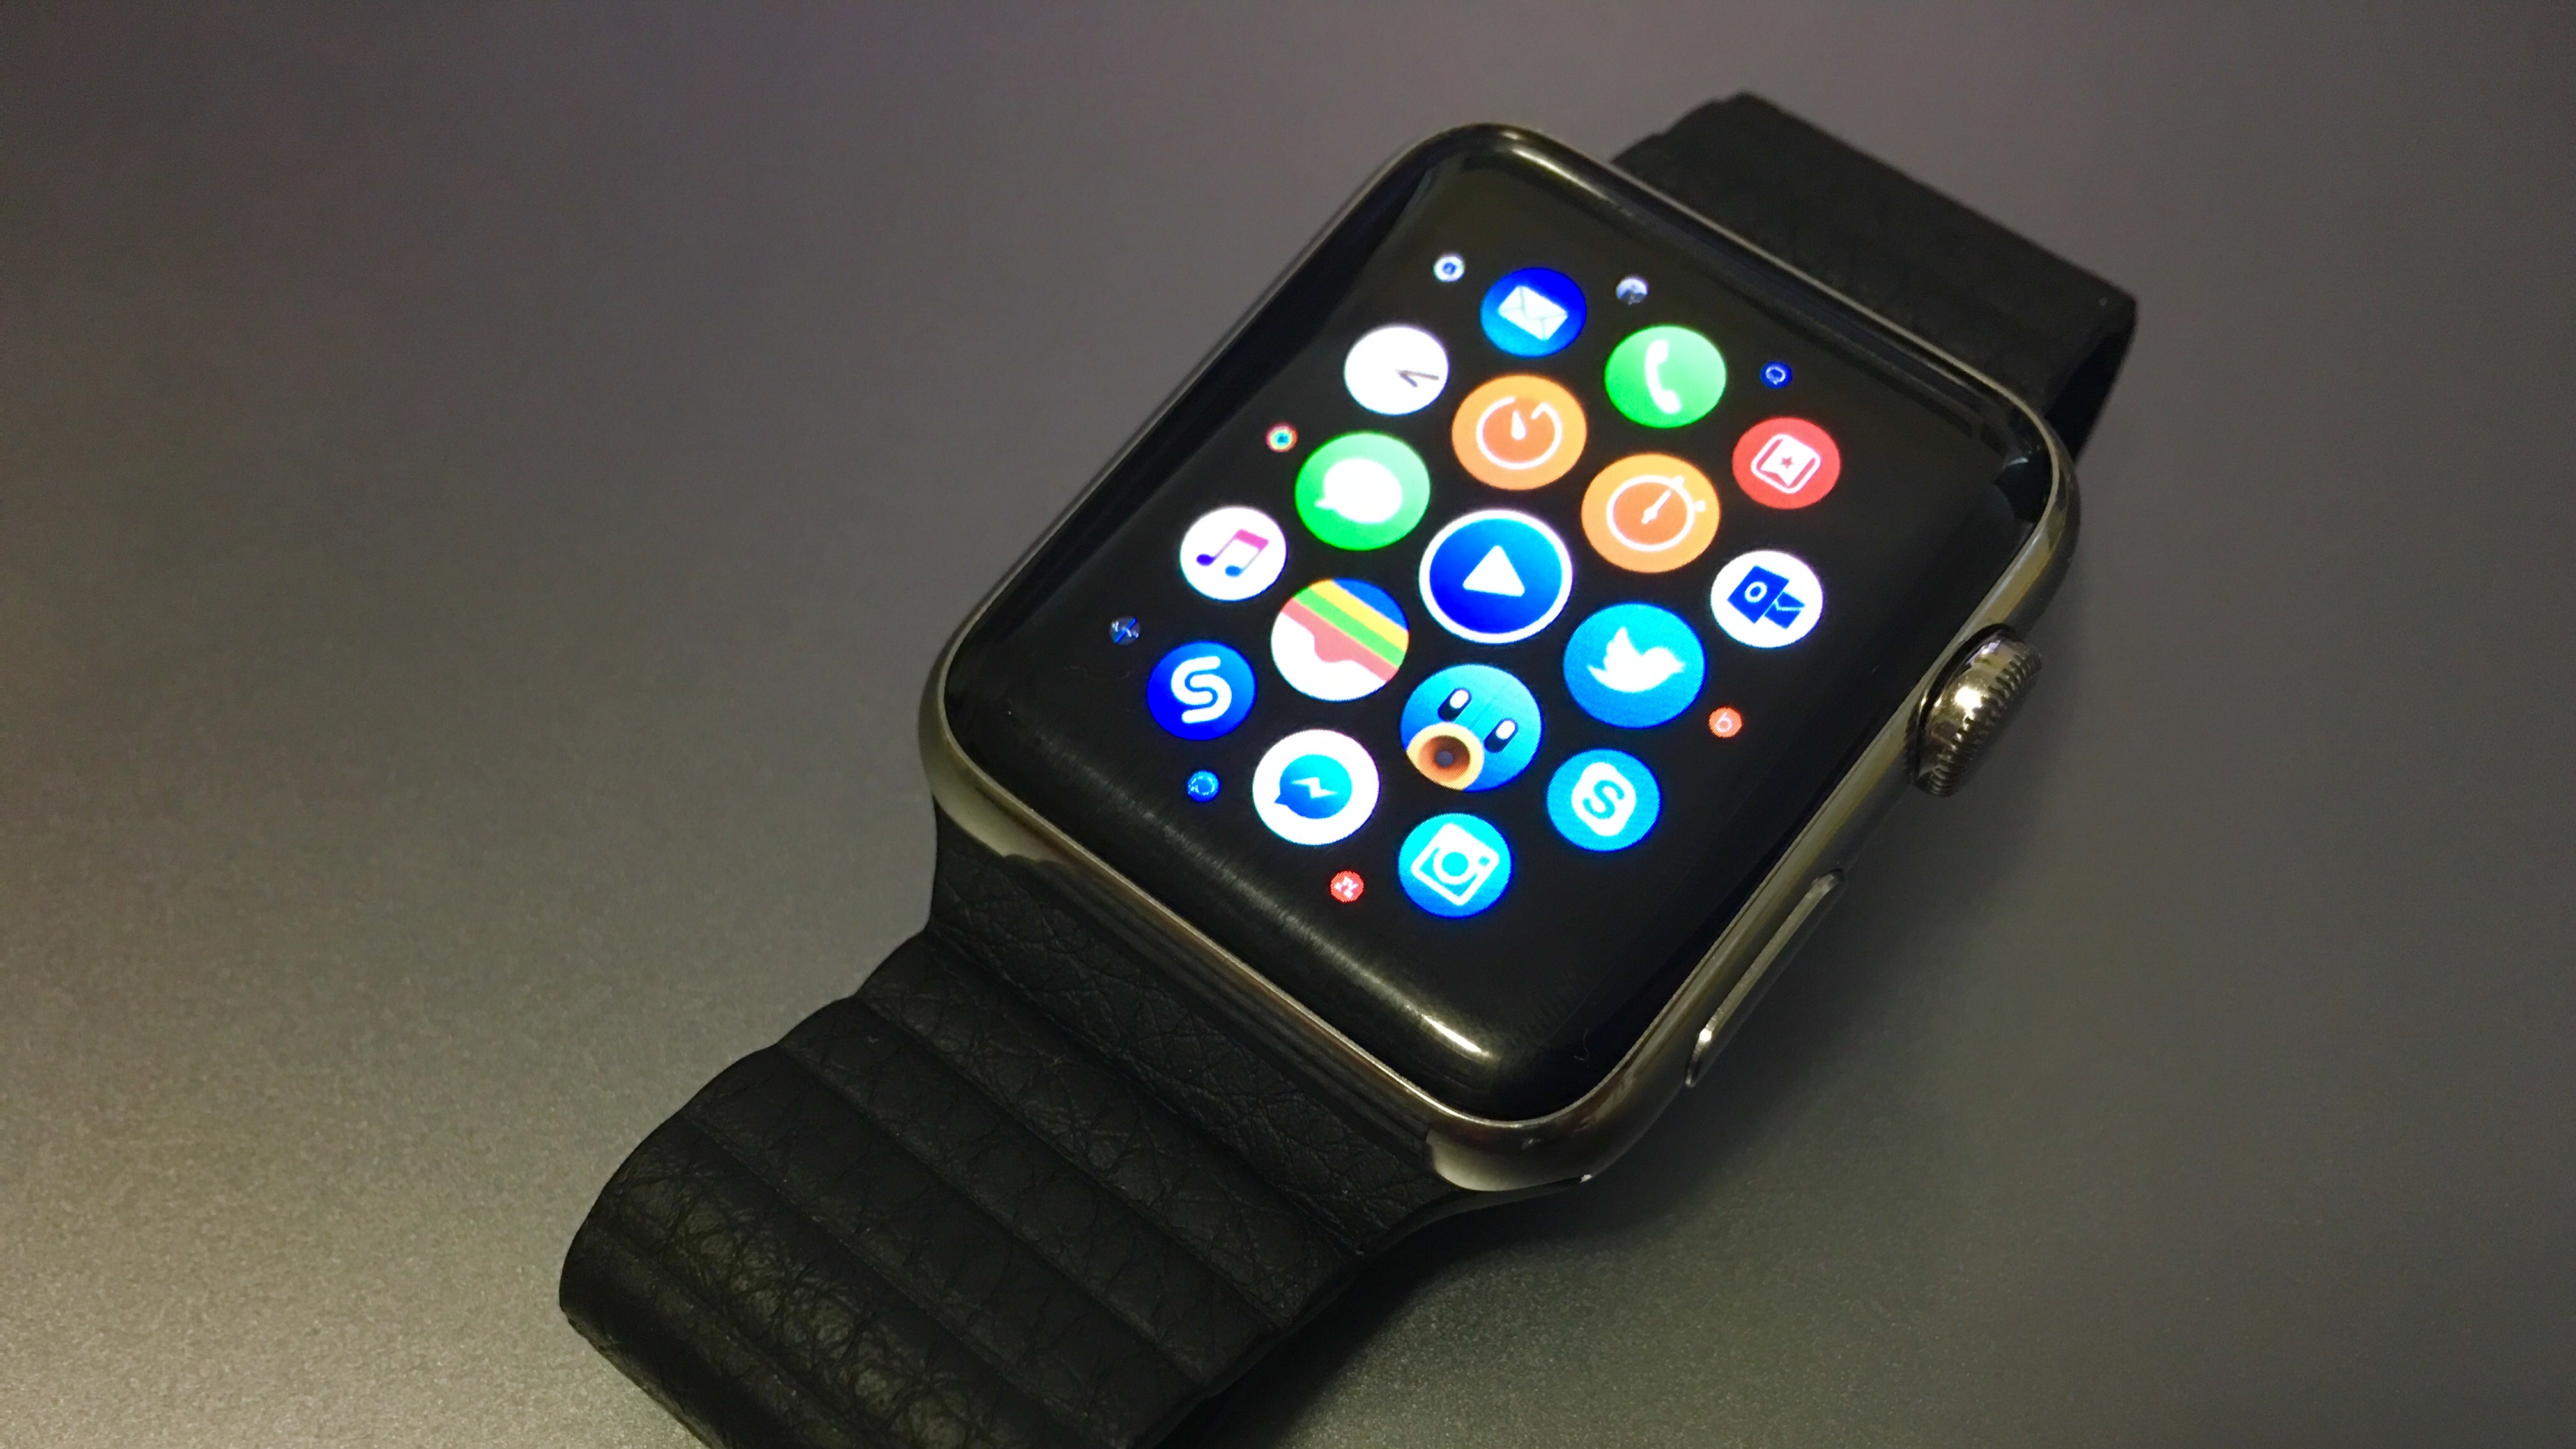 Apple Watch sales 7 million units